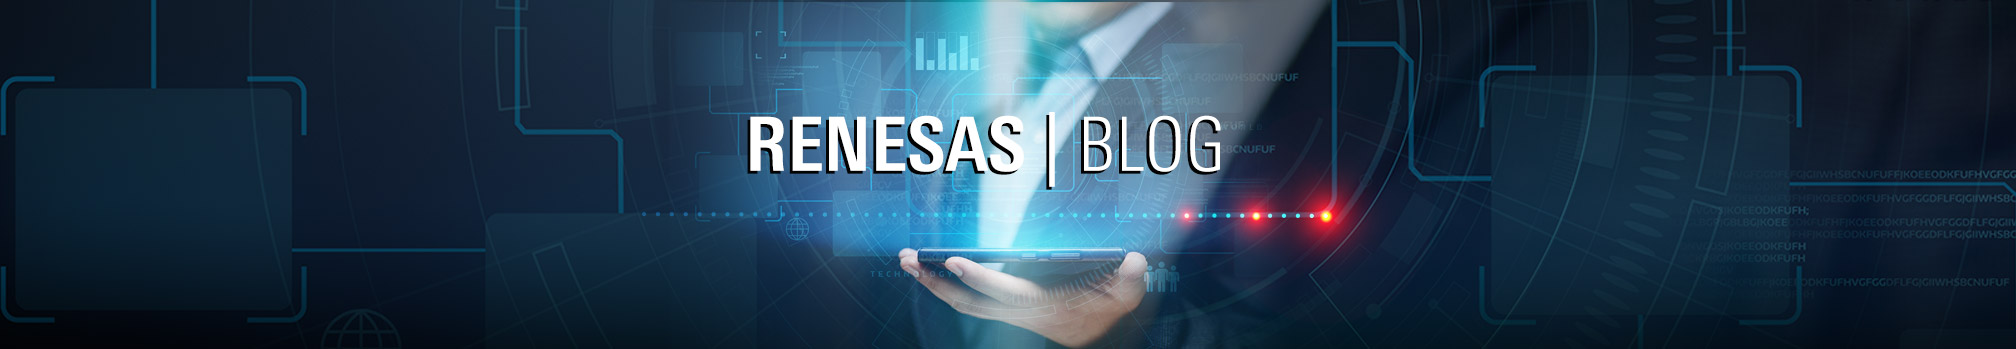 The Renesas Blog